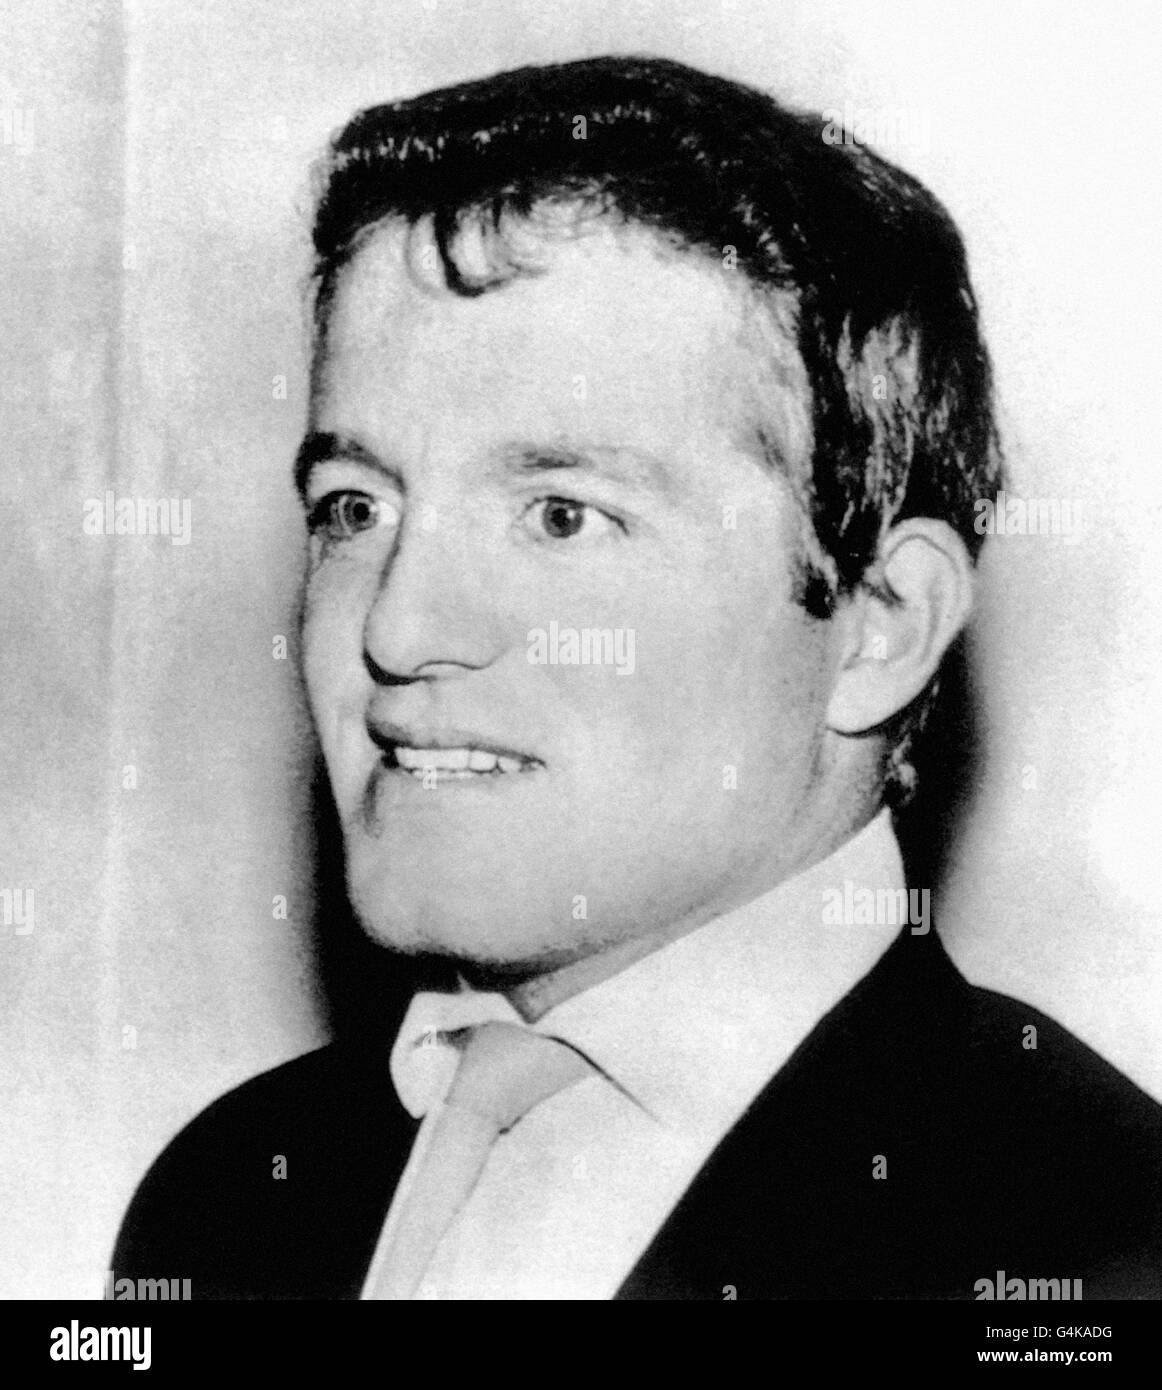 British Crime - Murder - The A6 Murder - Ilford - 1961 Stock Photo